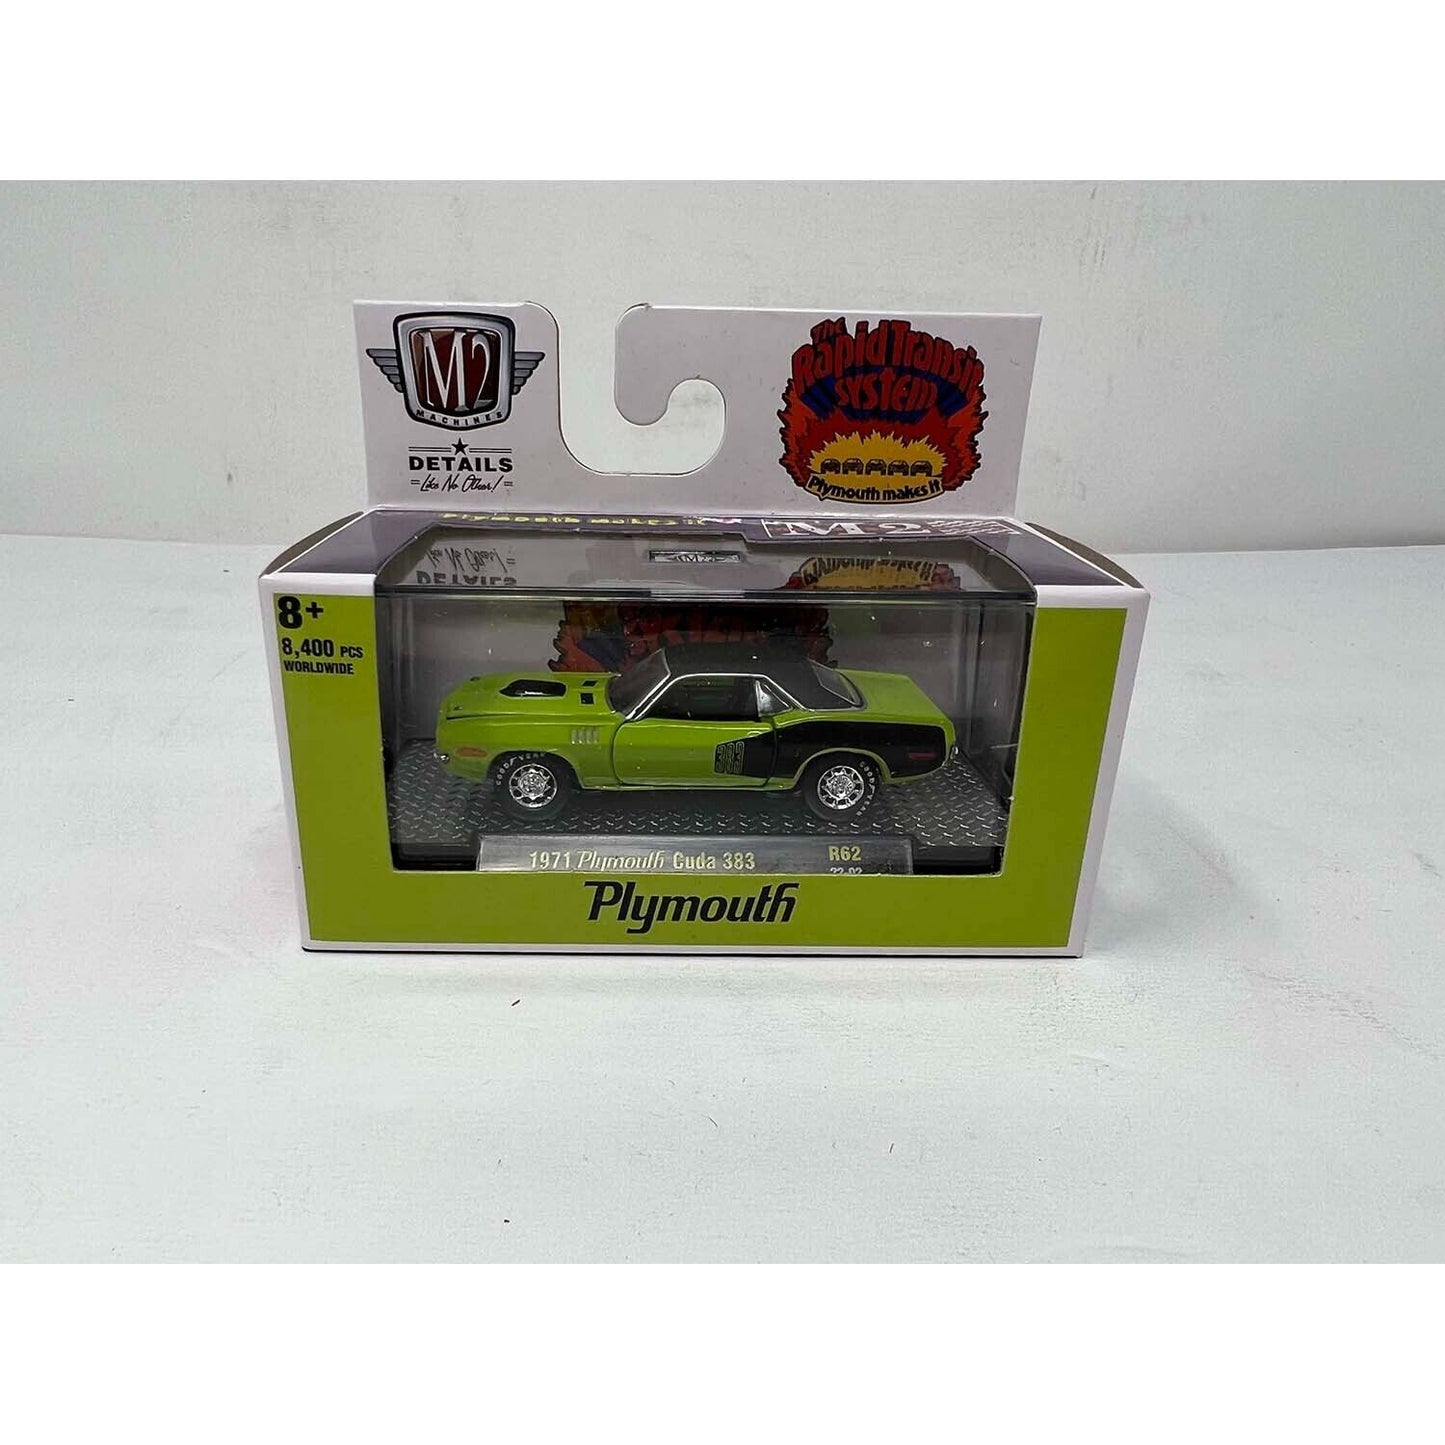 M2 Machines Plymouth 1971 Plymouth Cuda 383 R62 1:64 Diecast